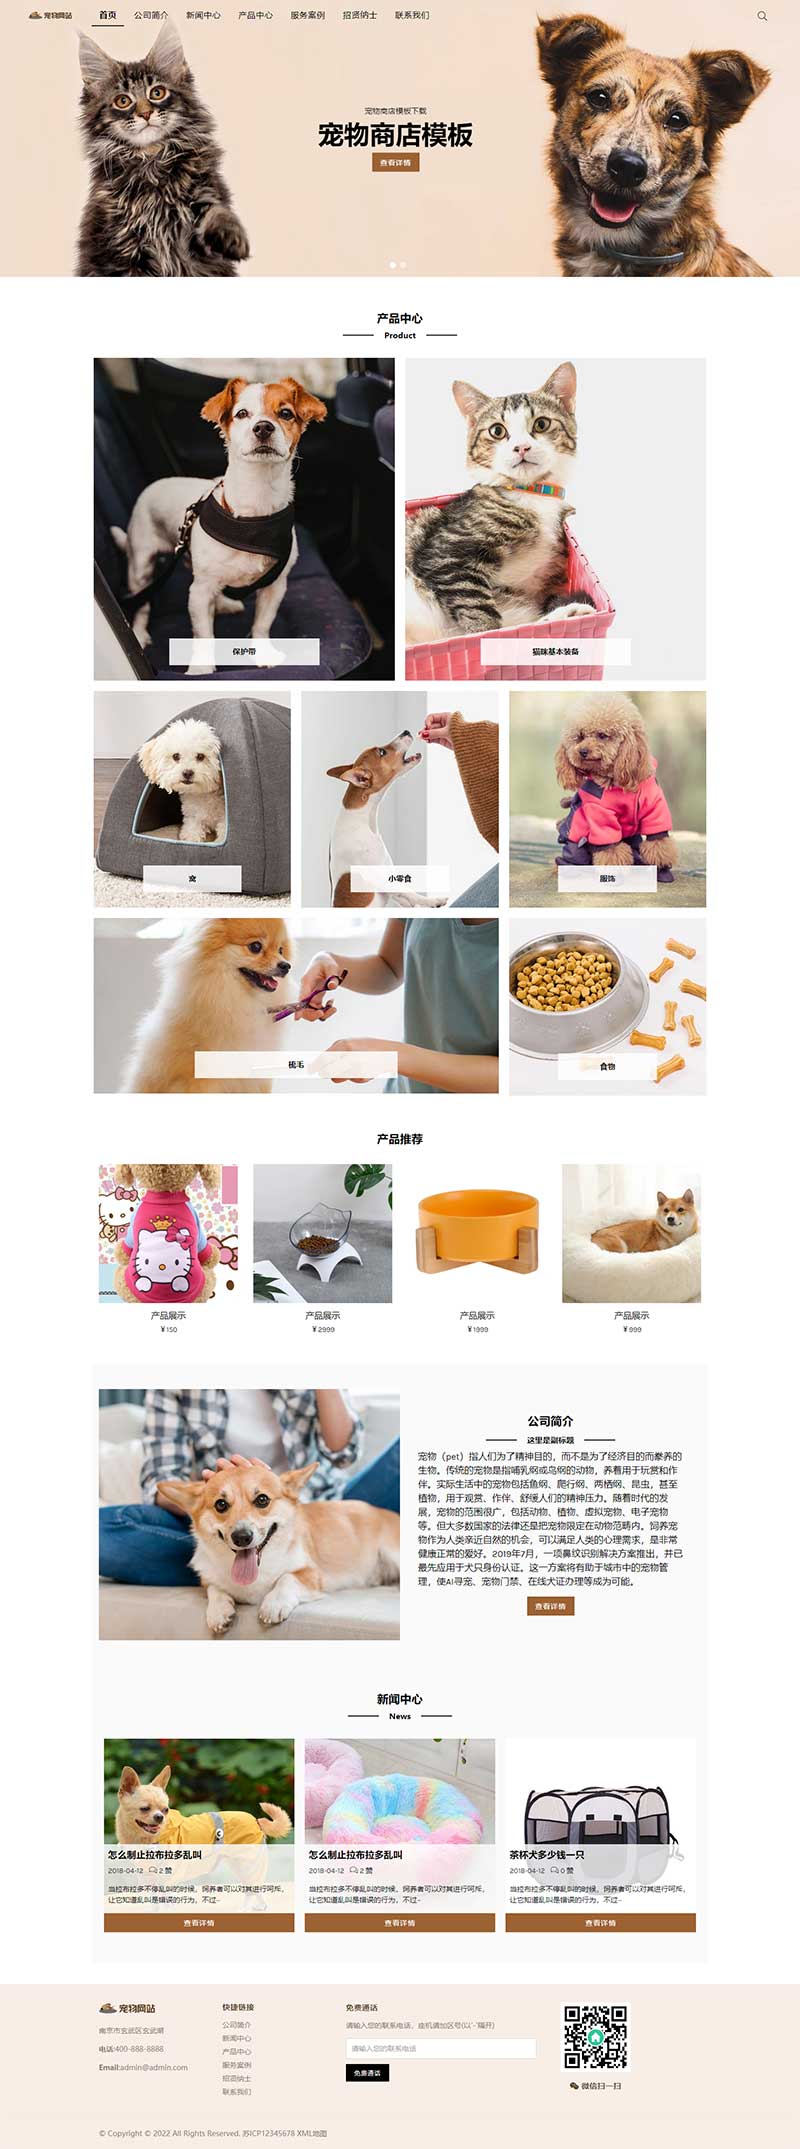 M1053 宠物商店宠物装备类网站pbootcms模板 宠物网站源码下载